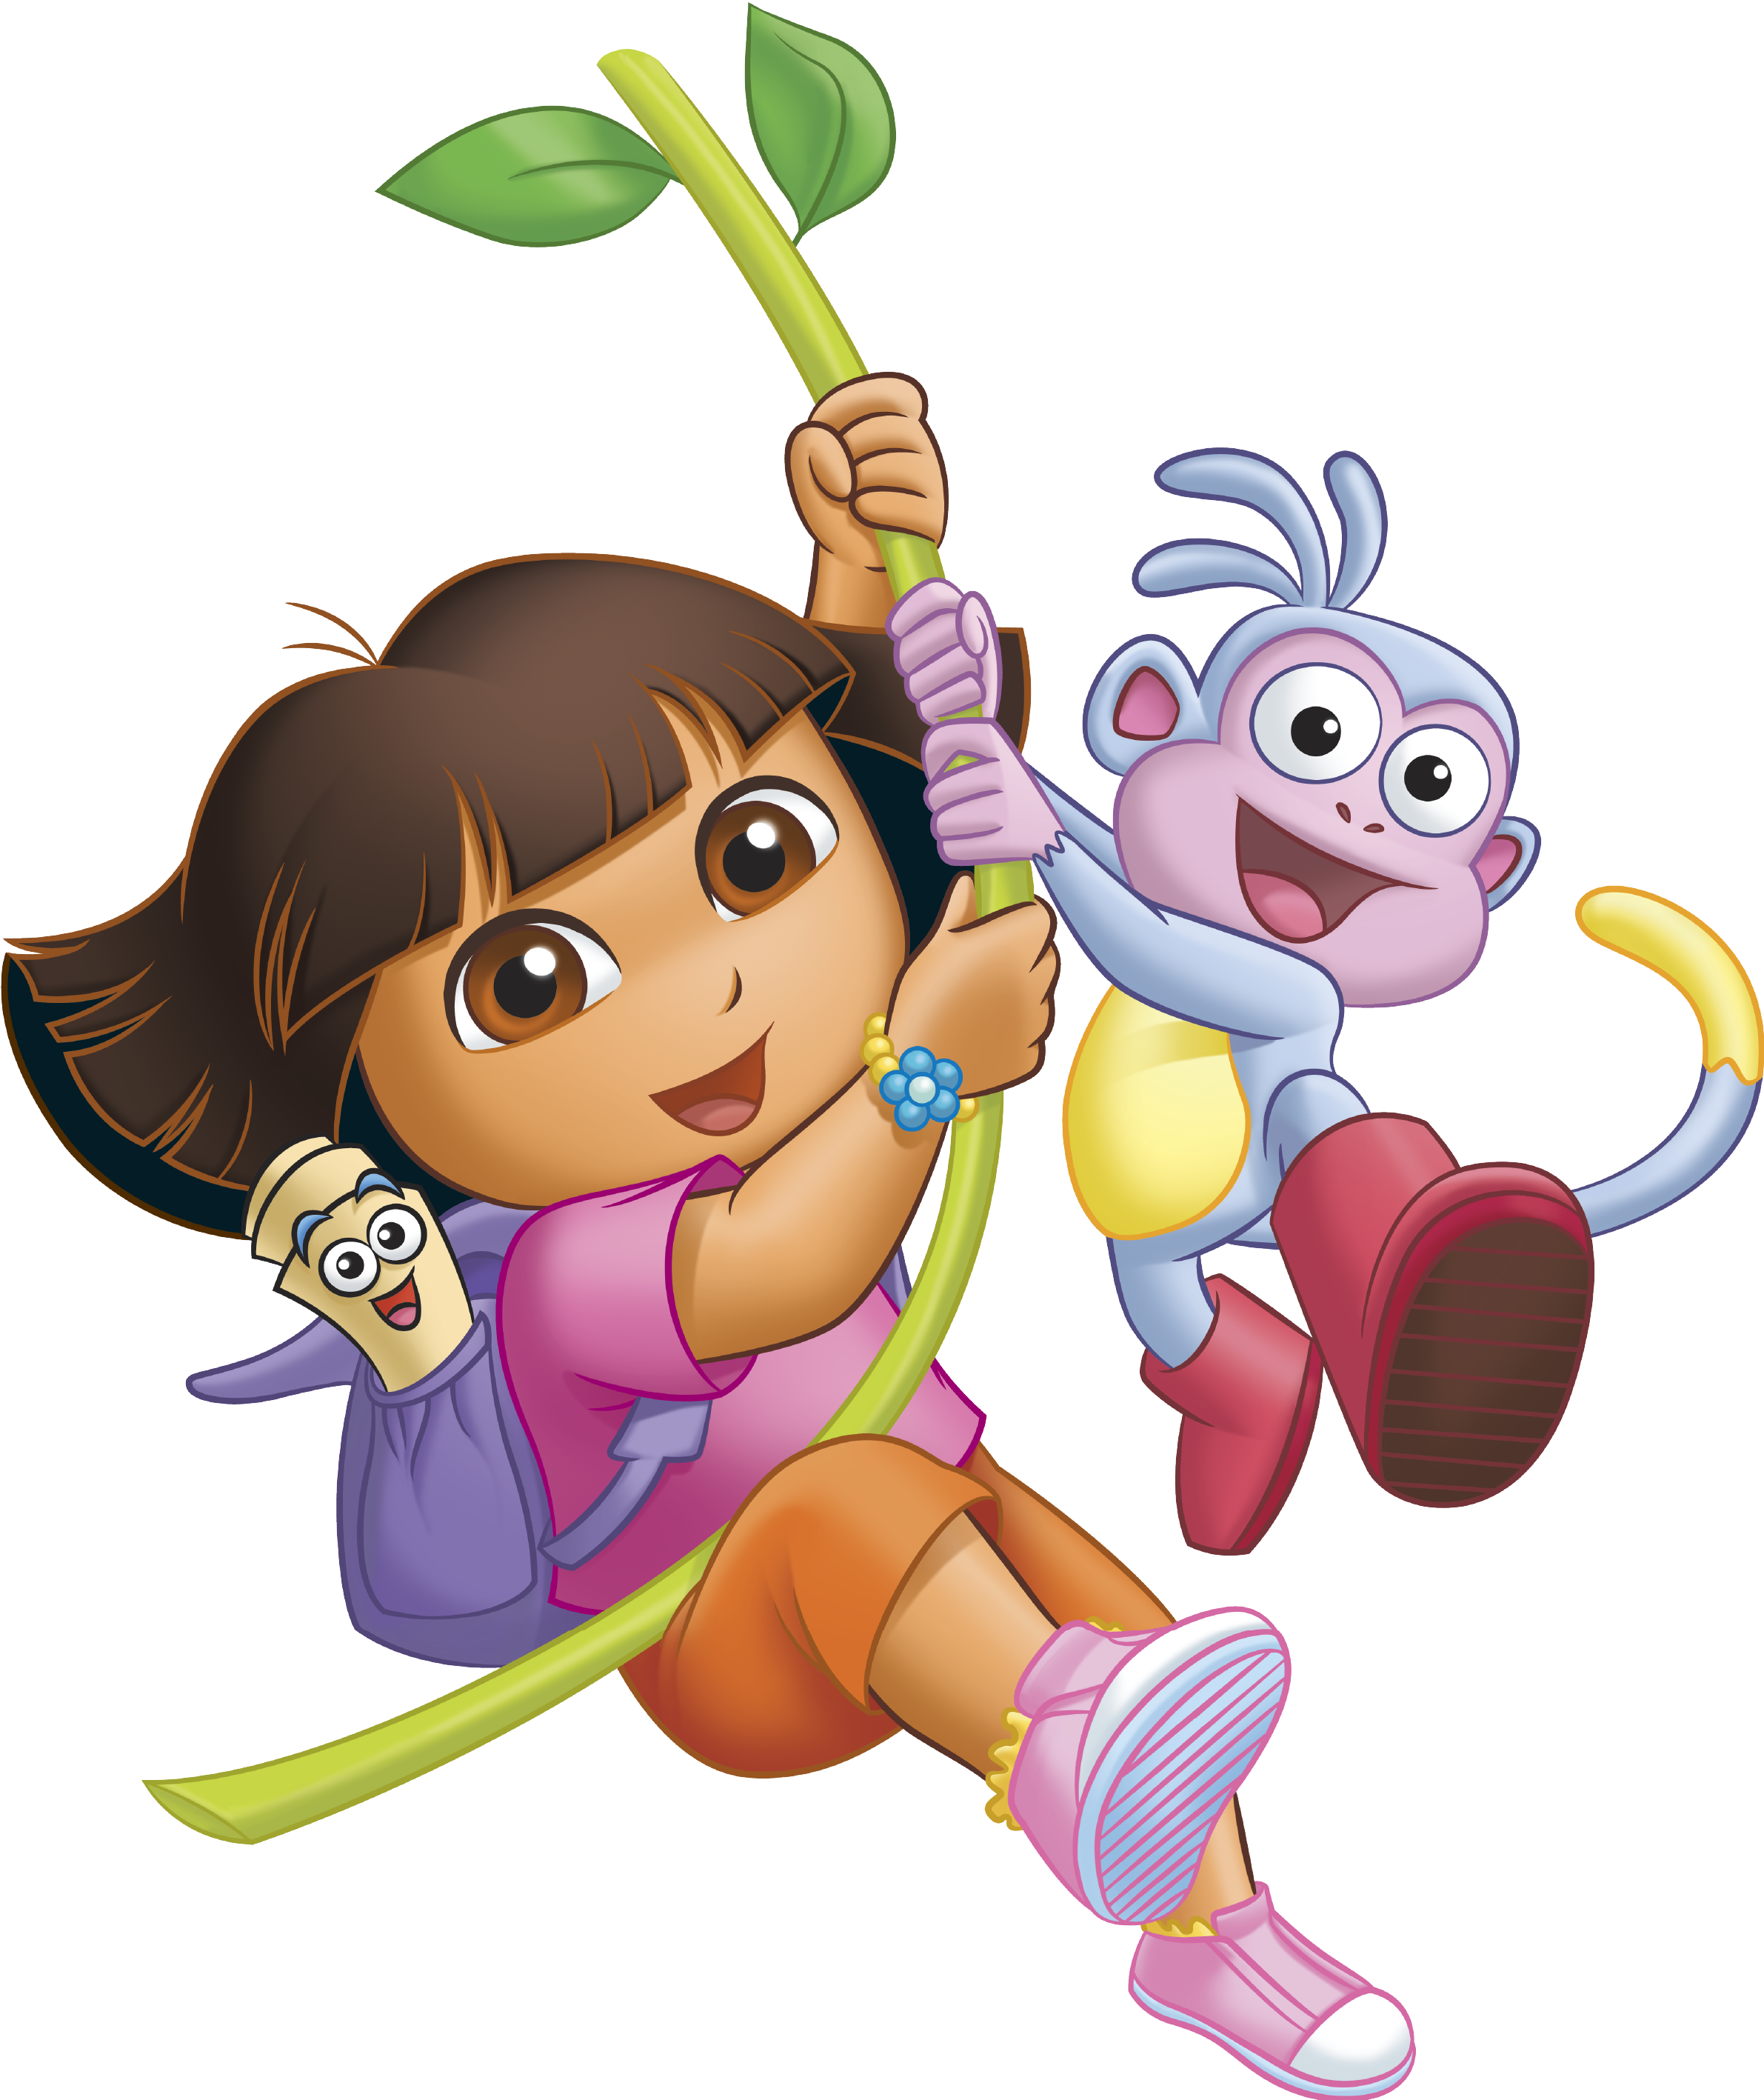 Clip Arts Related To : Dora The Explorer Clip Art Boots Hugging Dora. view ...